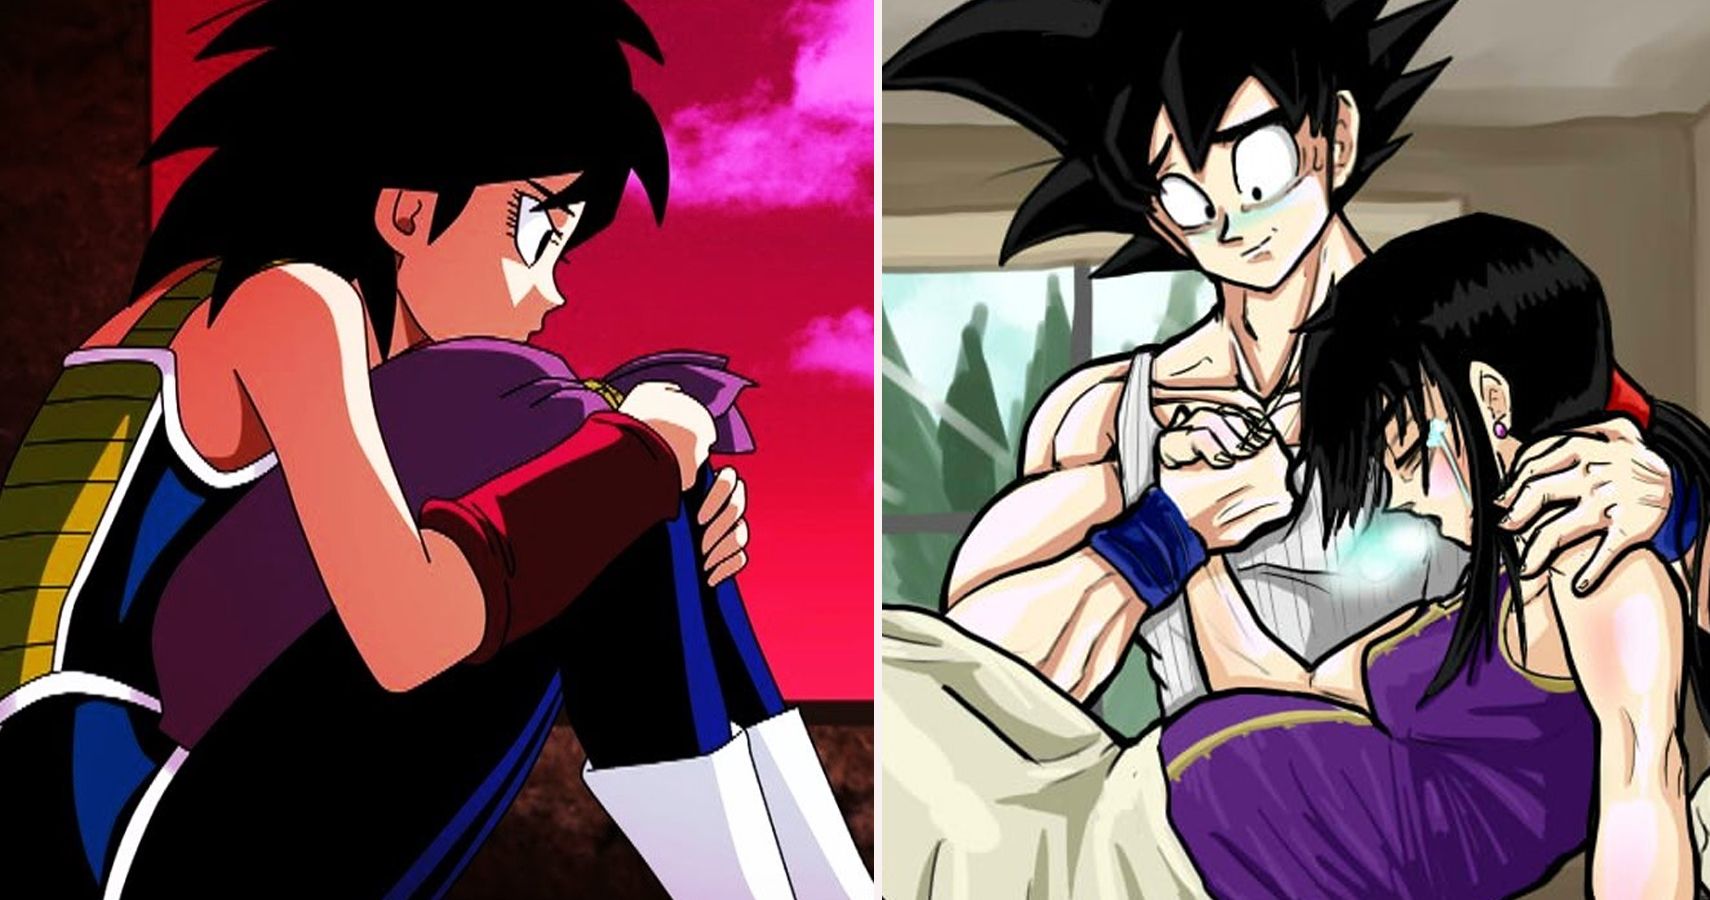 Goten and Trunks [Post RoSaT] vs Goku and Vegeta [Buu Saga